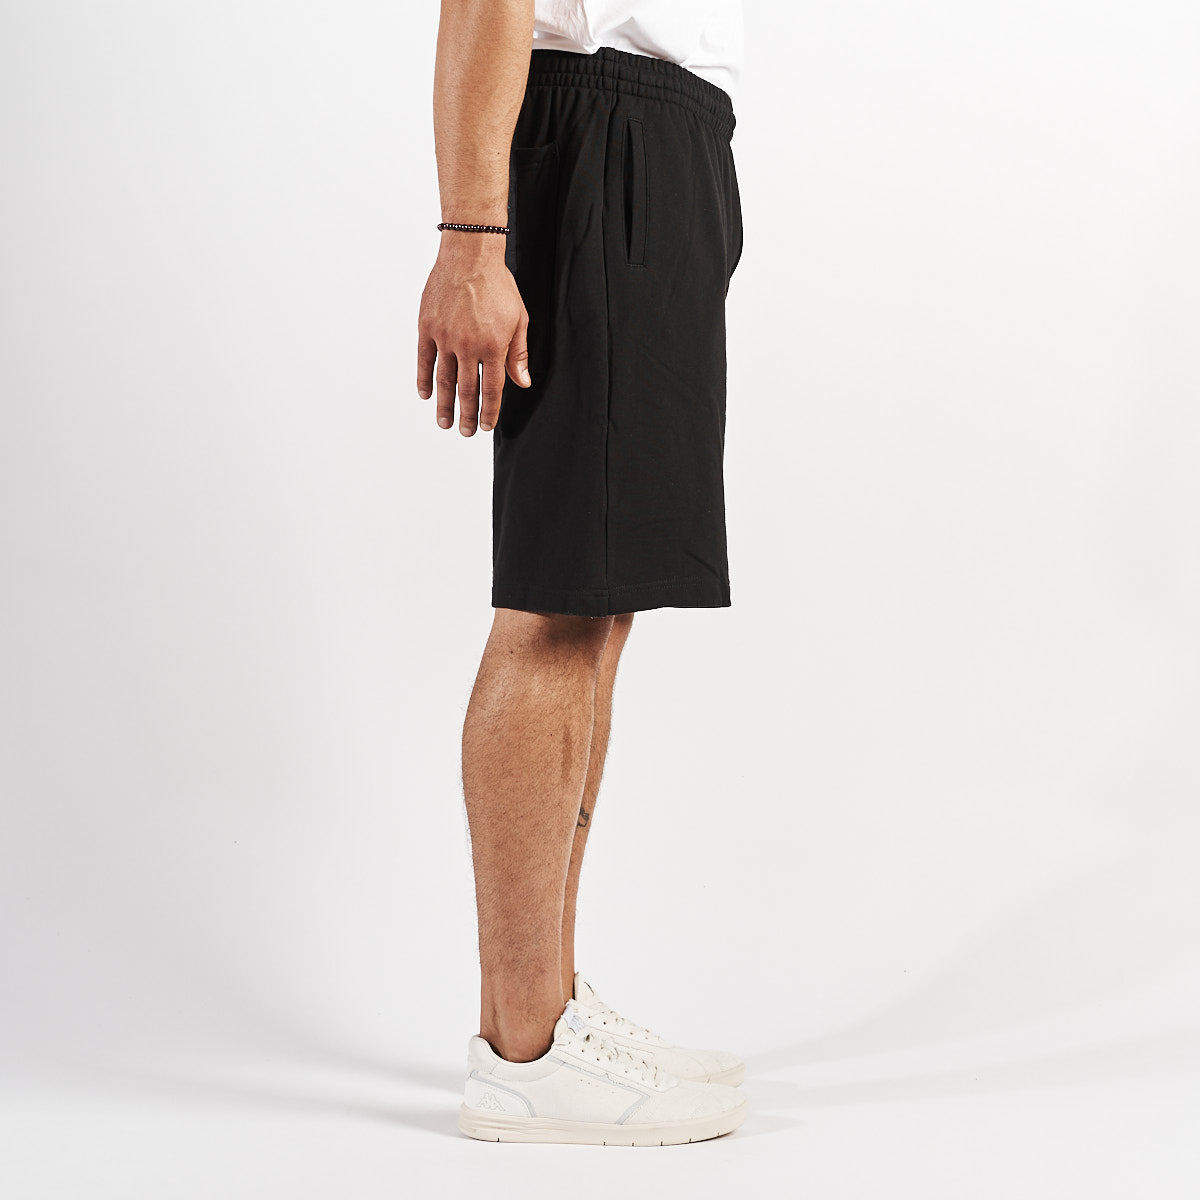 Pantalones cortos Negros Authentic Livor  Hombre - imagen 3